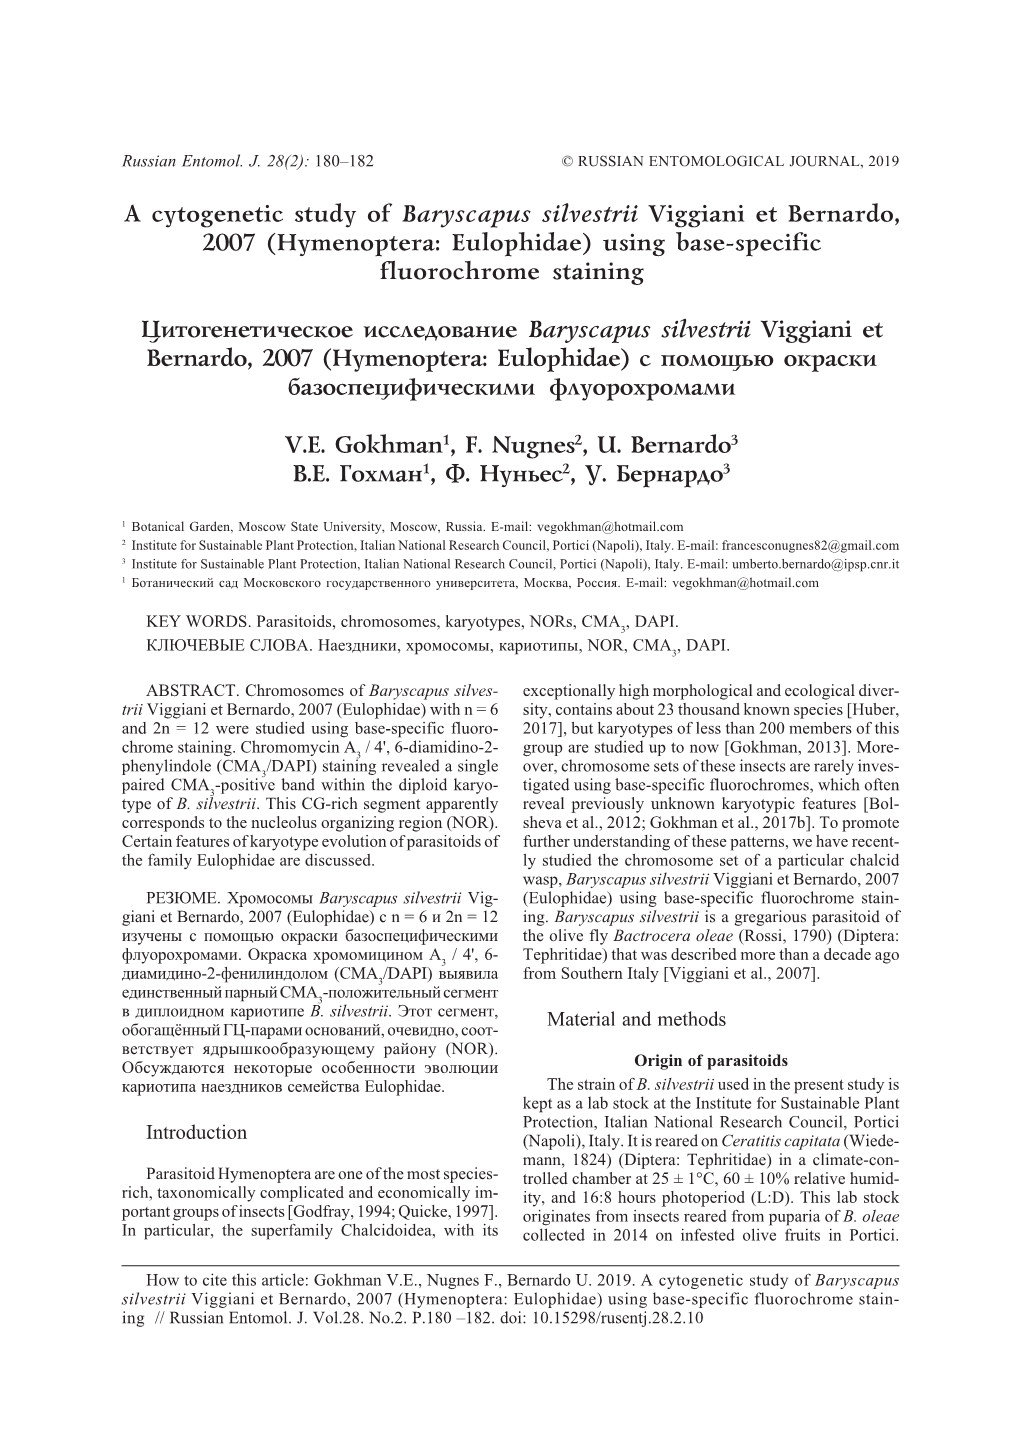 A Cytogenetic Study of Baryscapus Silvestrii Viggiani Et Bernardo, 2007 (Hymenoptera: Eulophidae) Using Base-Specific Fluorochrome Staining